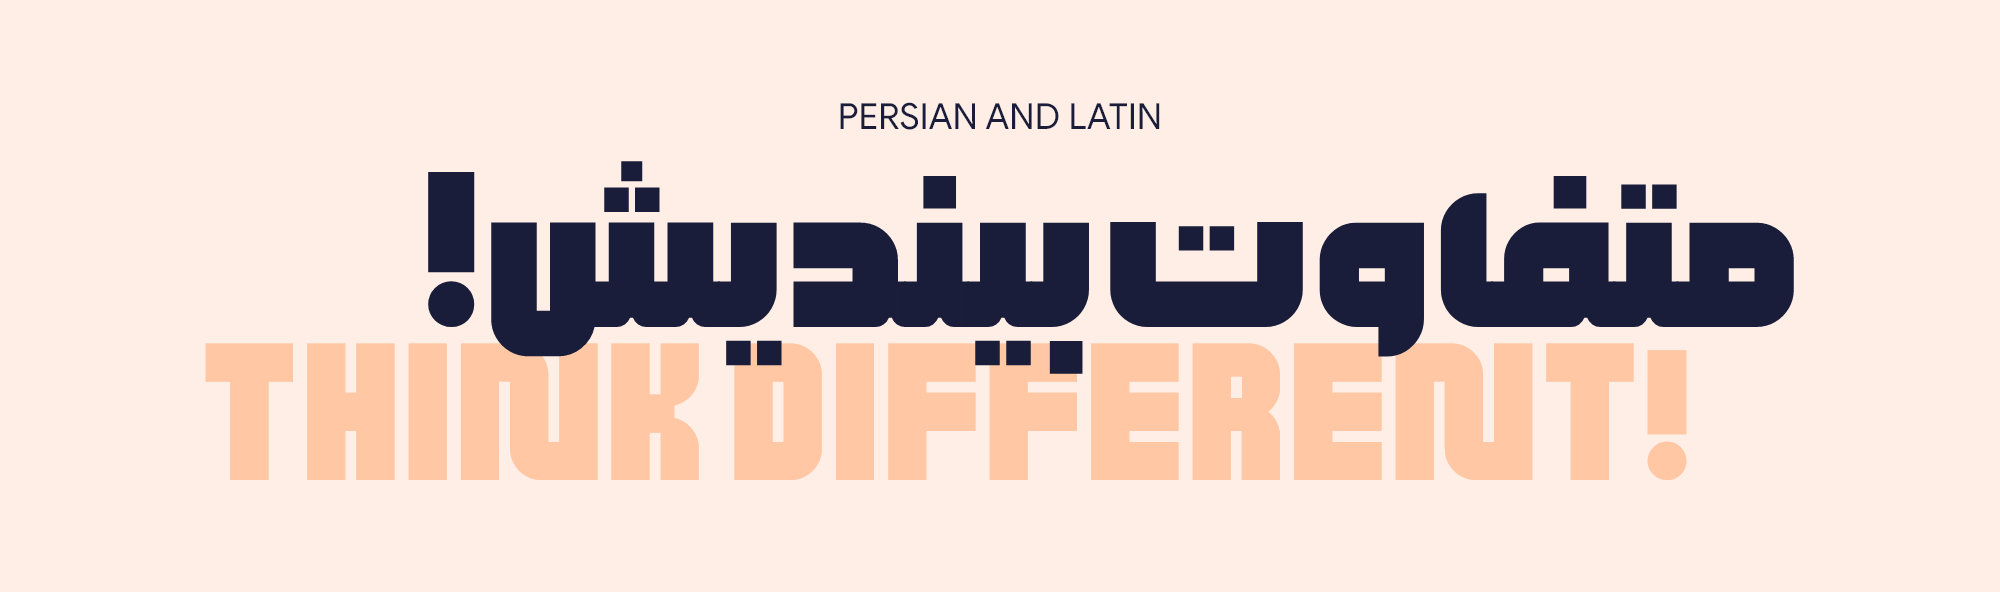 PERSIAN VS LATIN 4